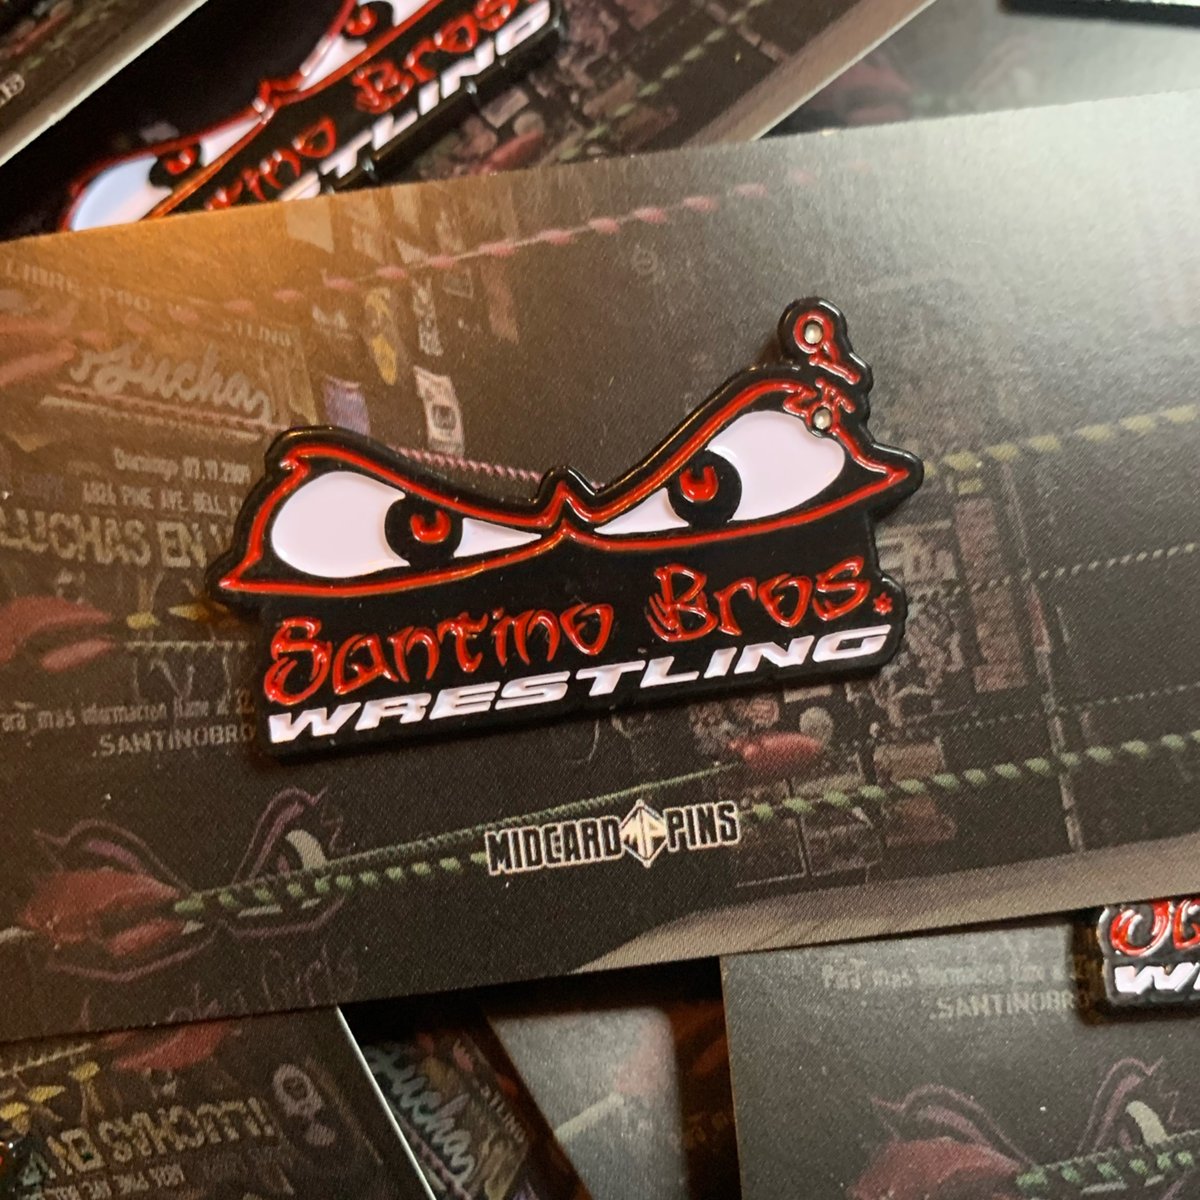 About Santino Bros. – Santino Bros. Wrestling